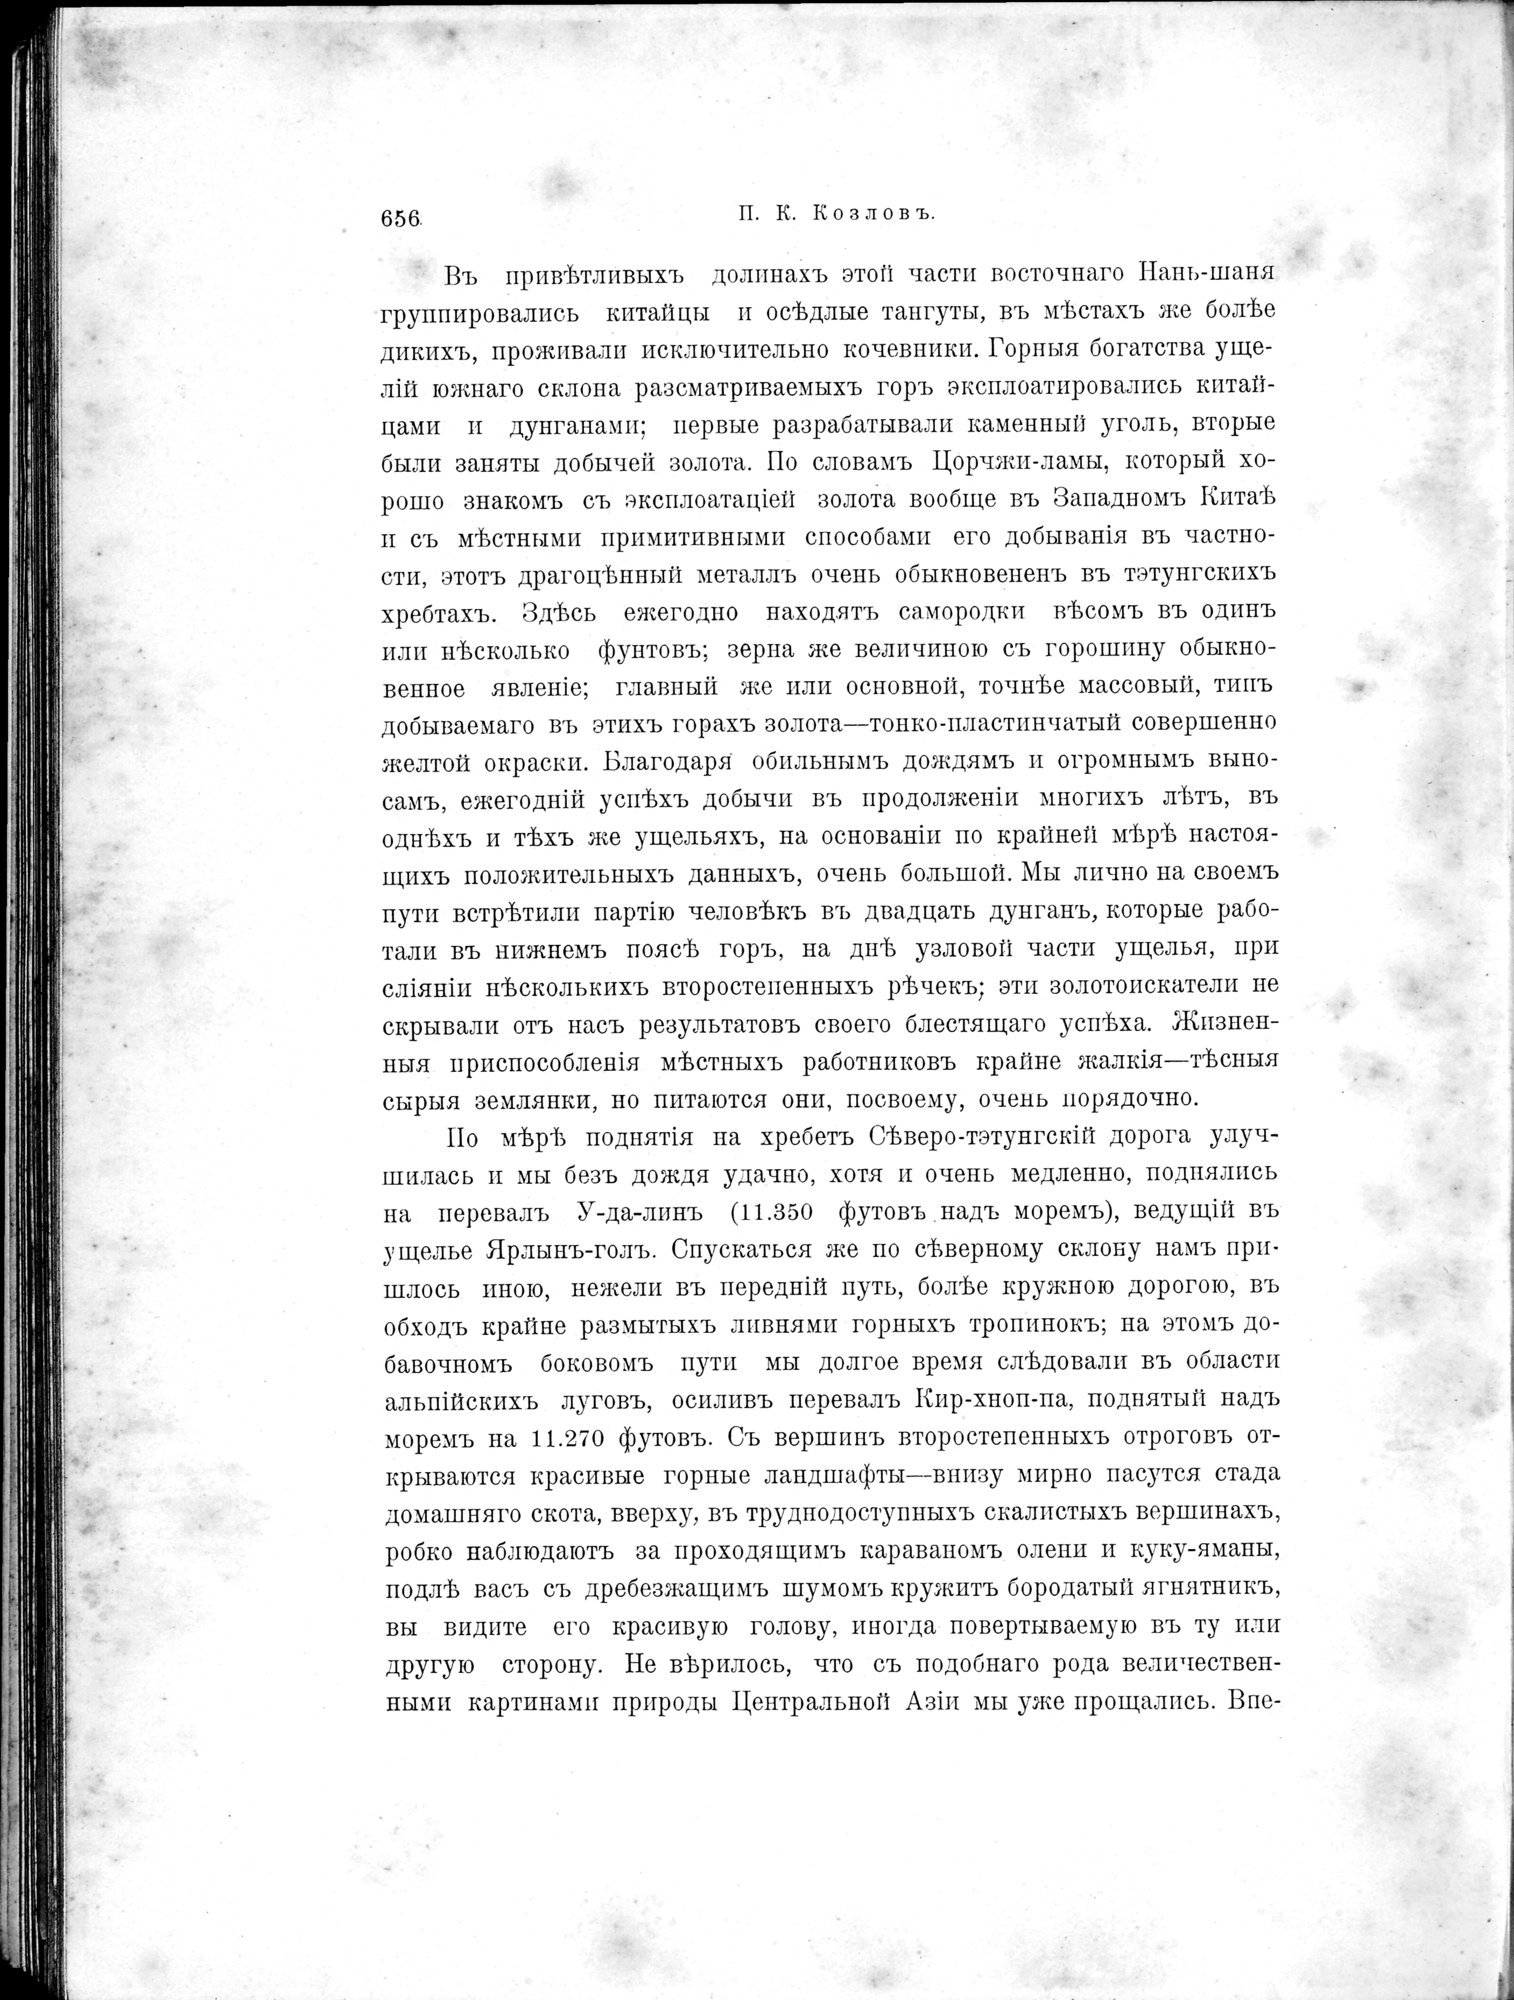 Mongoliia i Kam : vol.2 / Page 486 (Grayscale High Resolution Image)